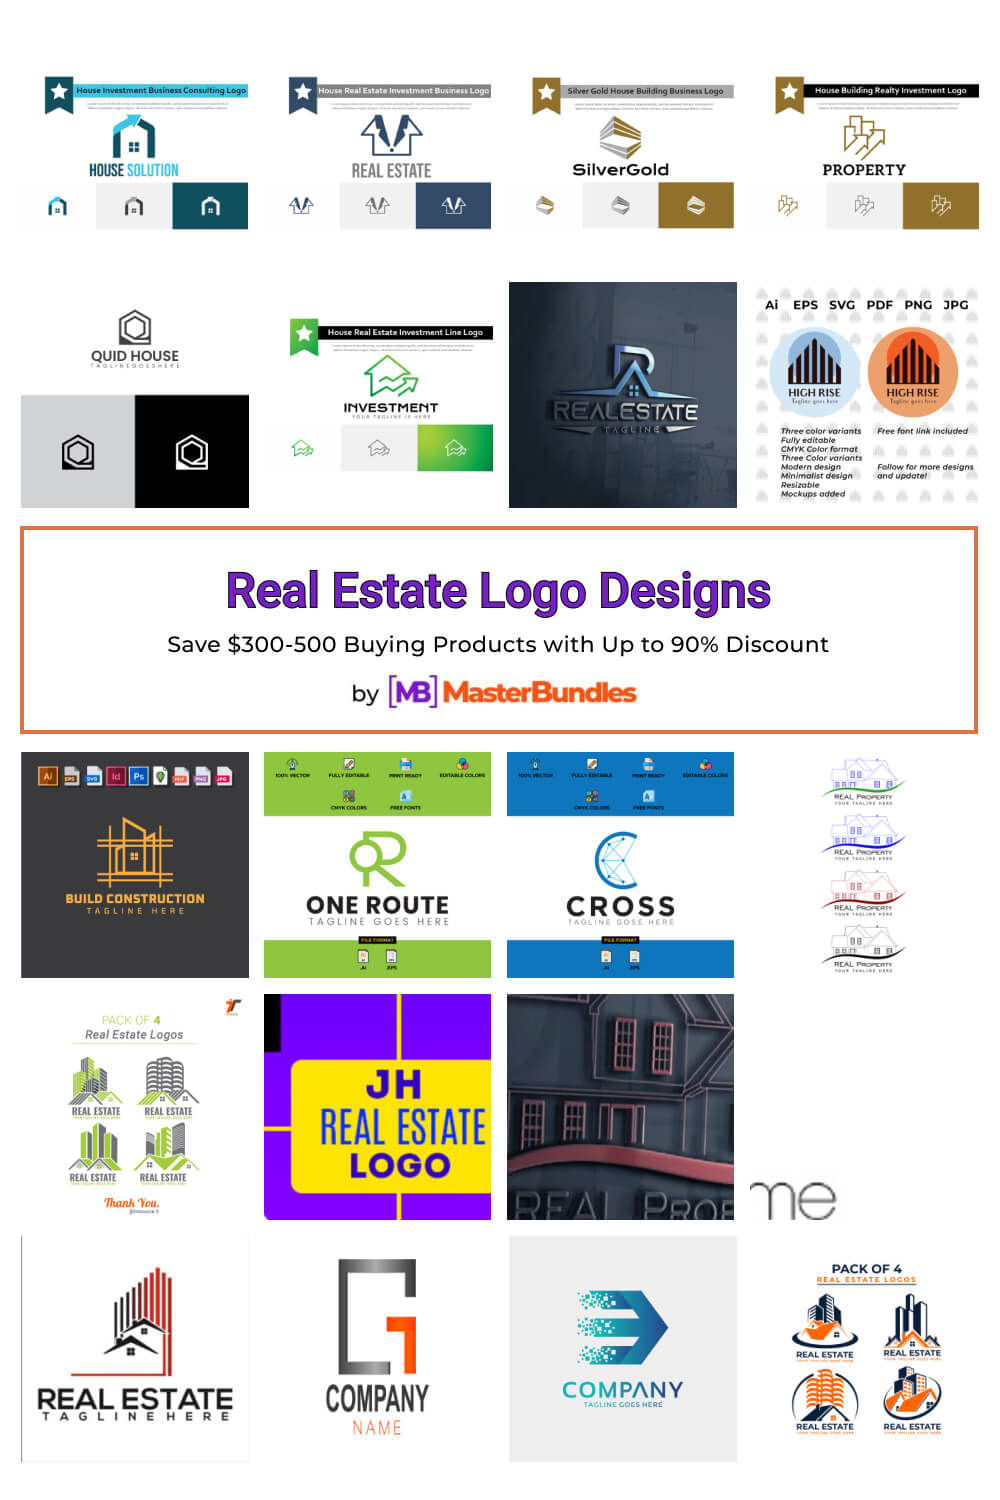 real estate logo designs pinterest image.